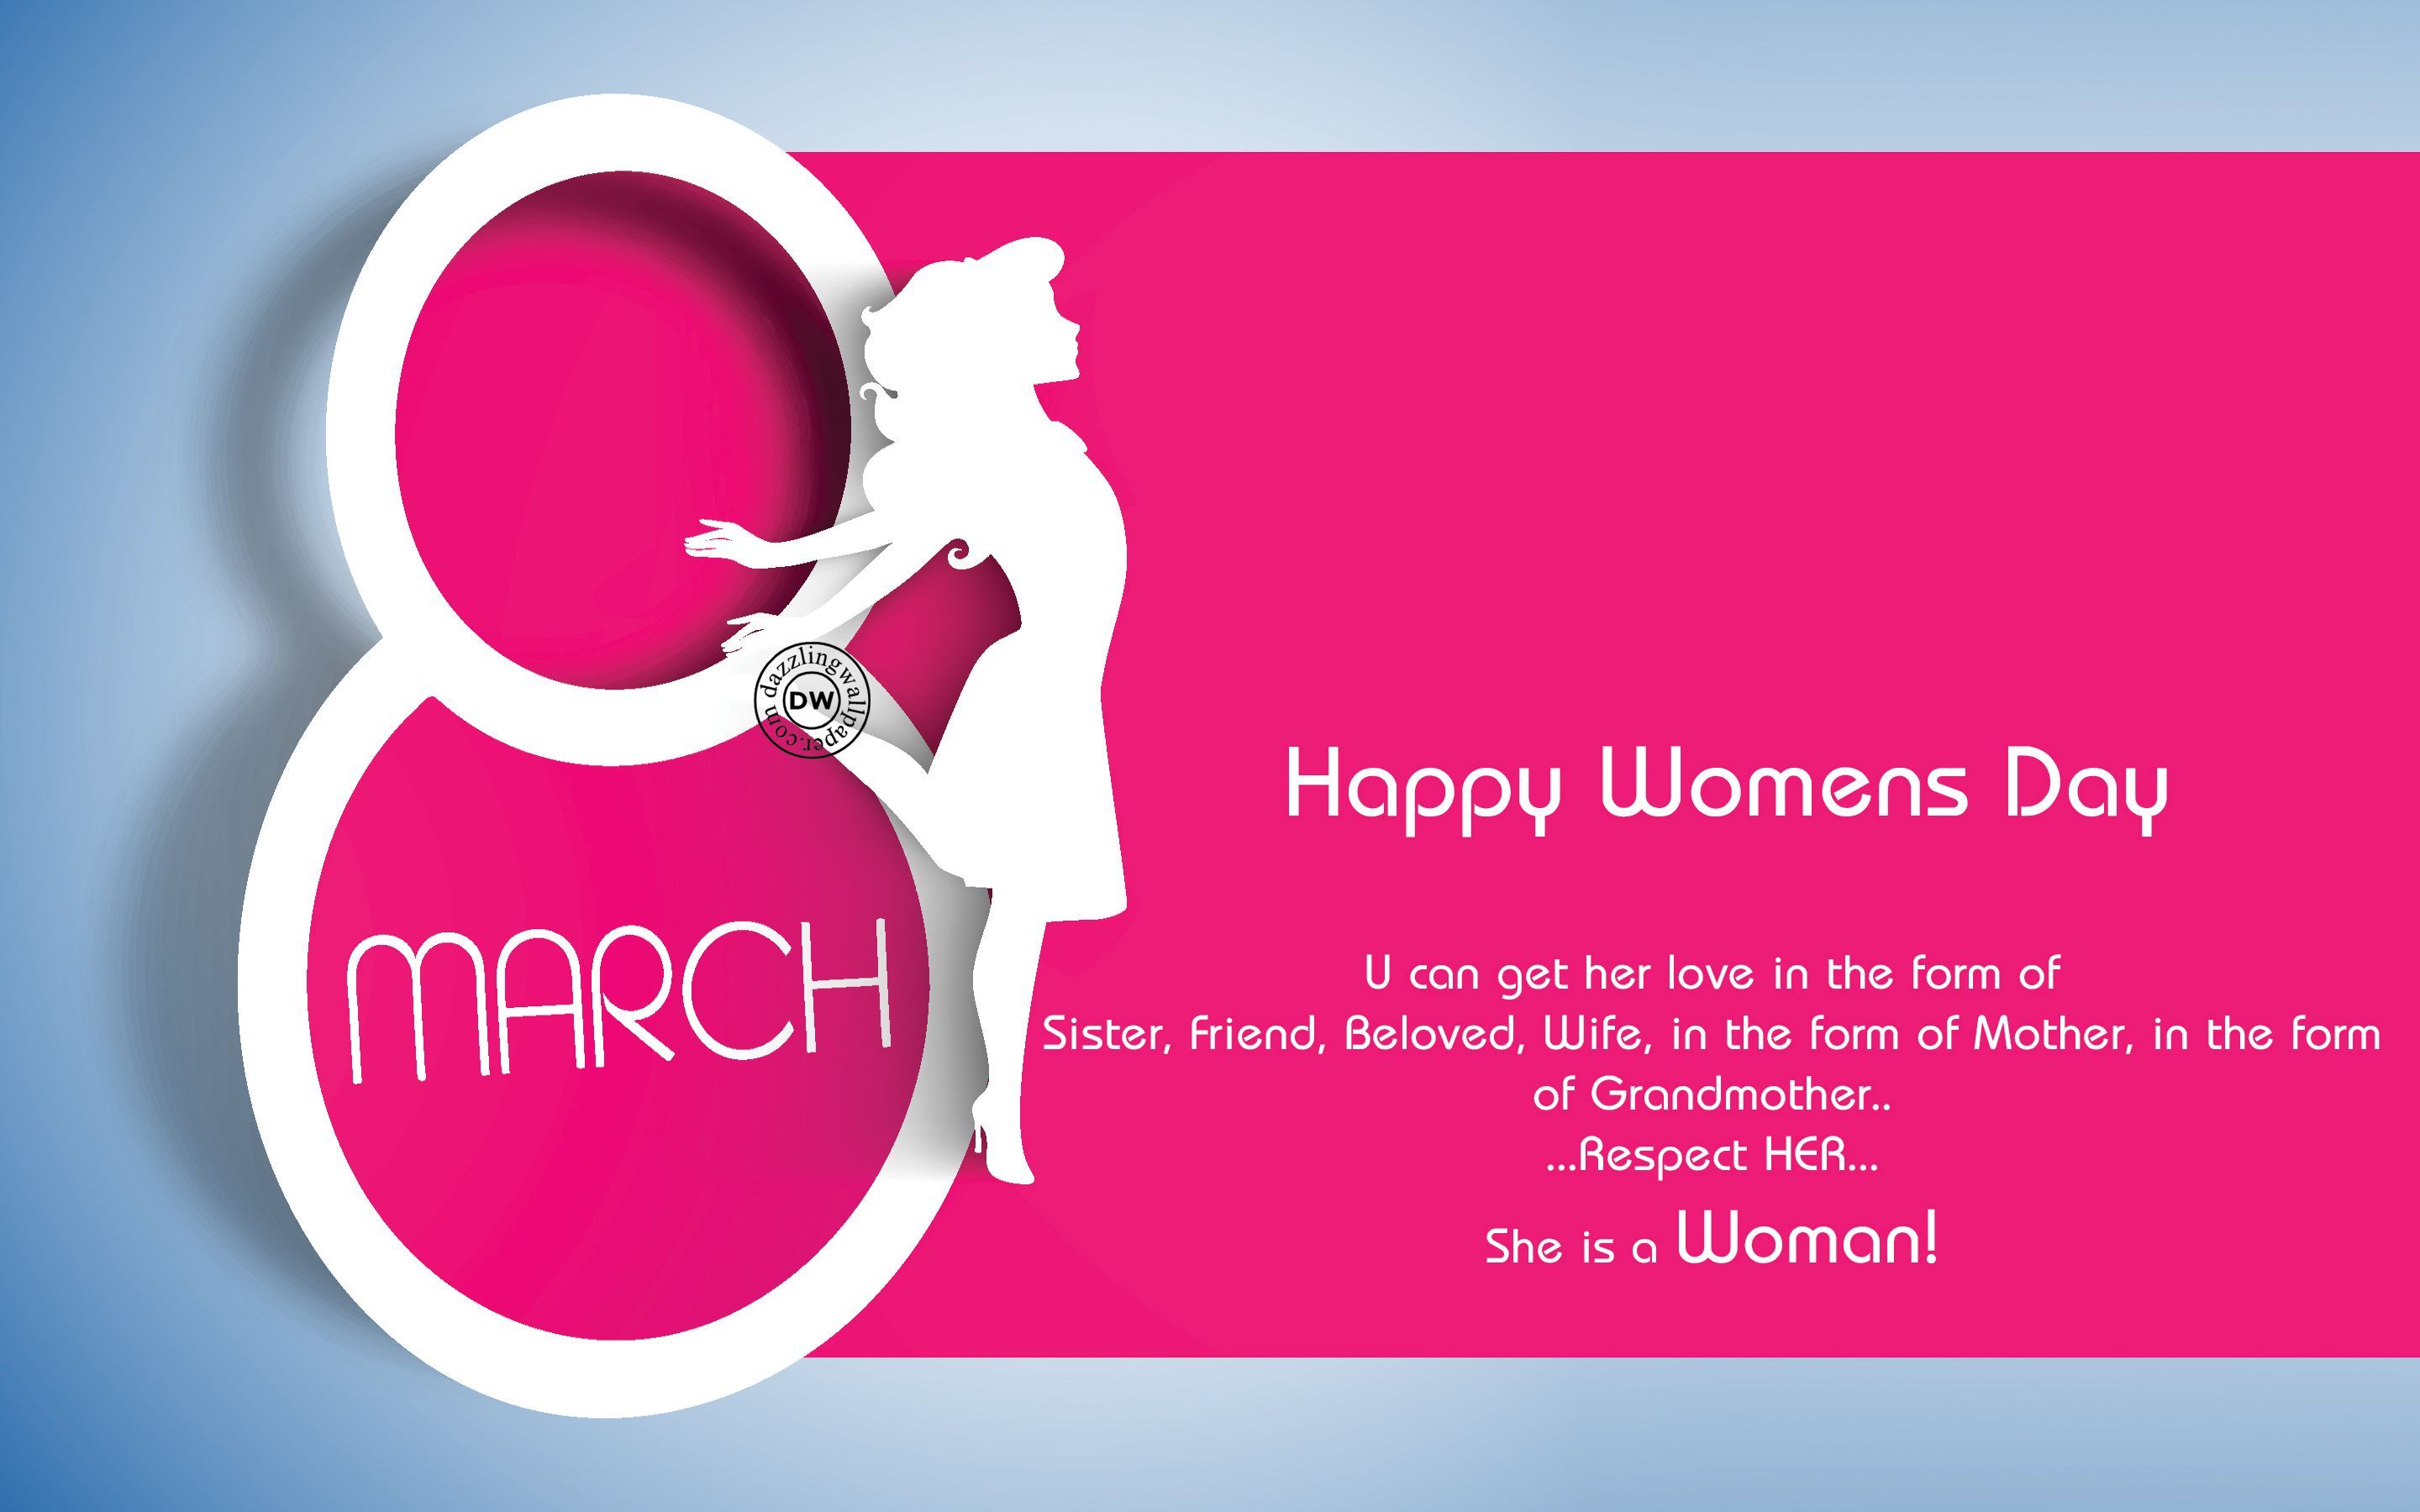 Happy Women's Day Wallpaper Free .wallpaperaccess.com